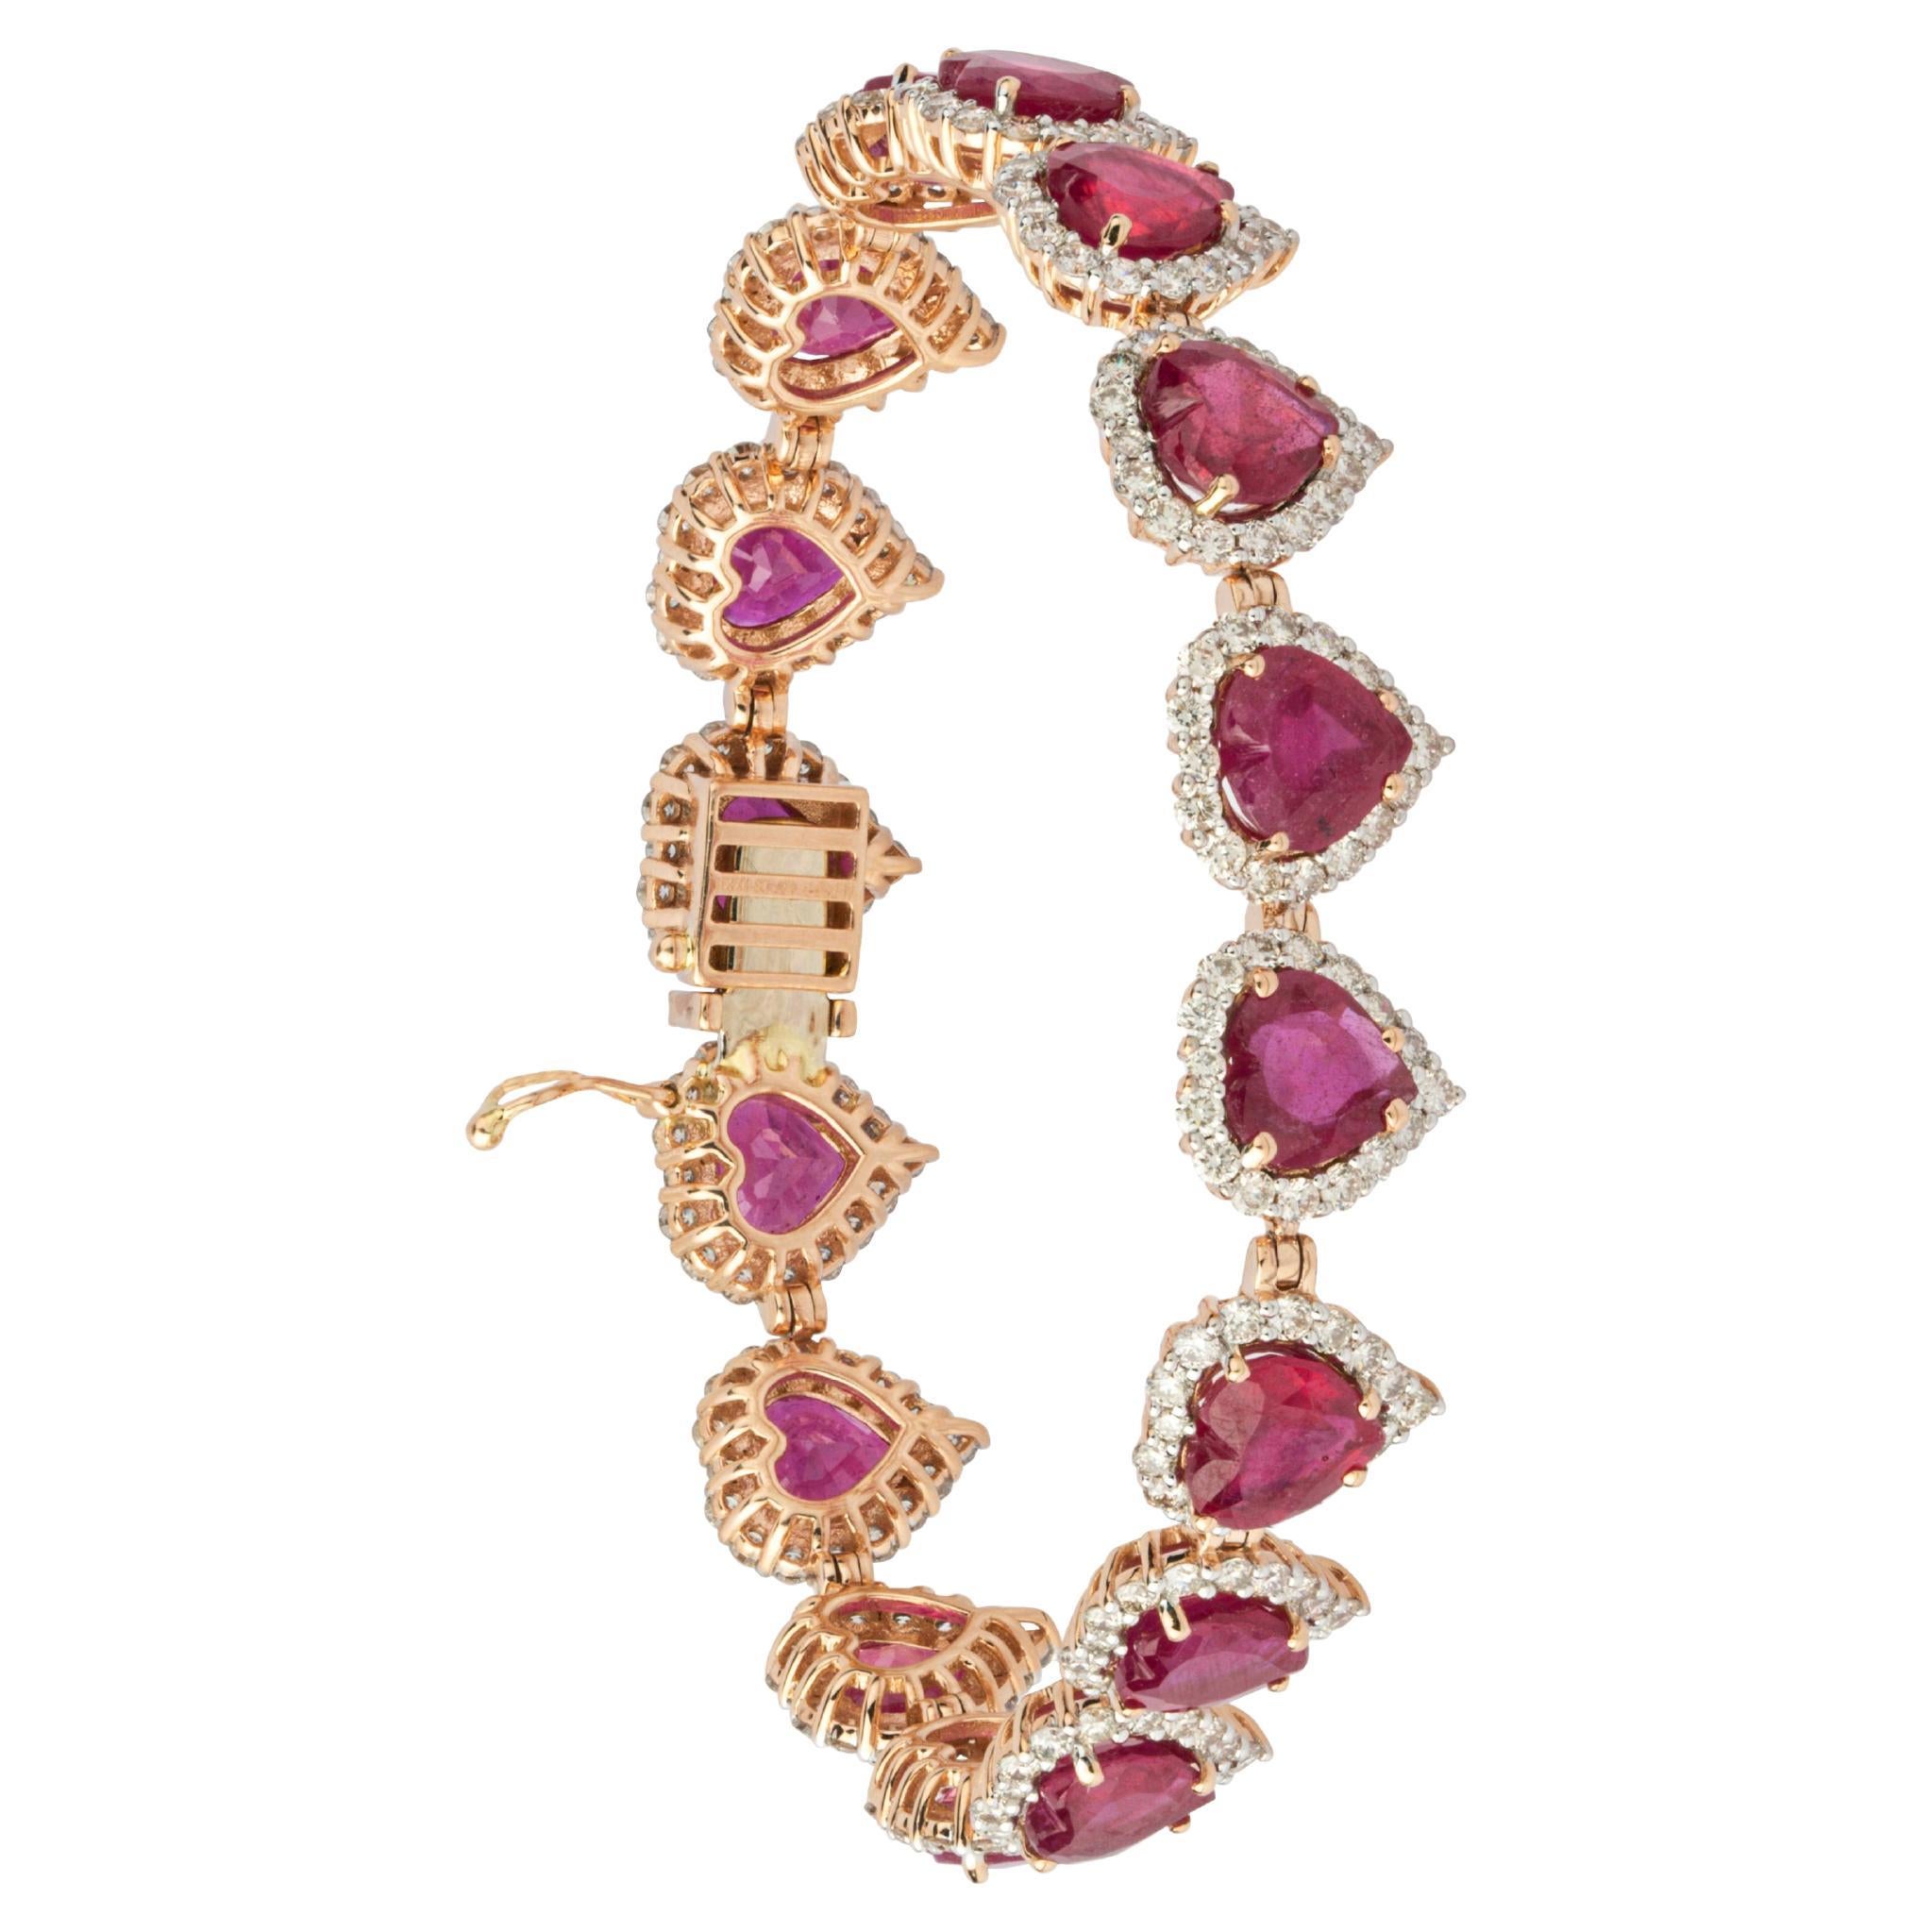 Bracelet tennis en or 18 carats avec diamants naturels et rubis naturels